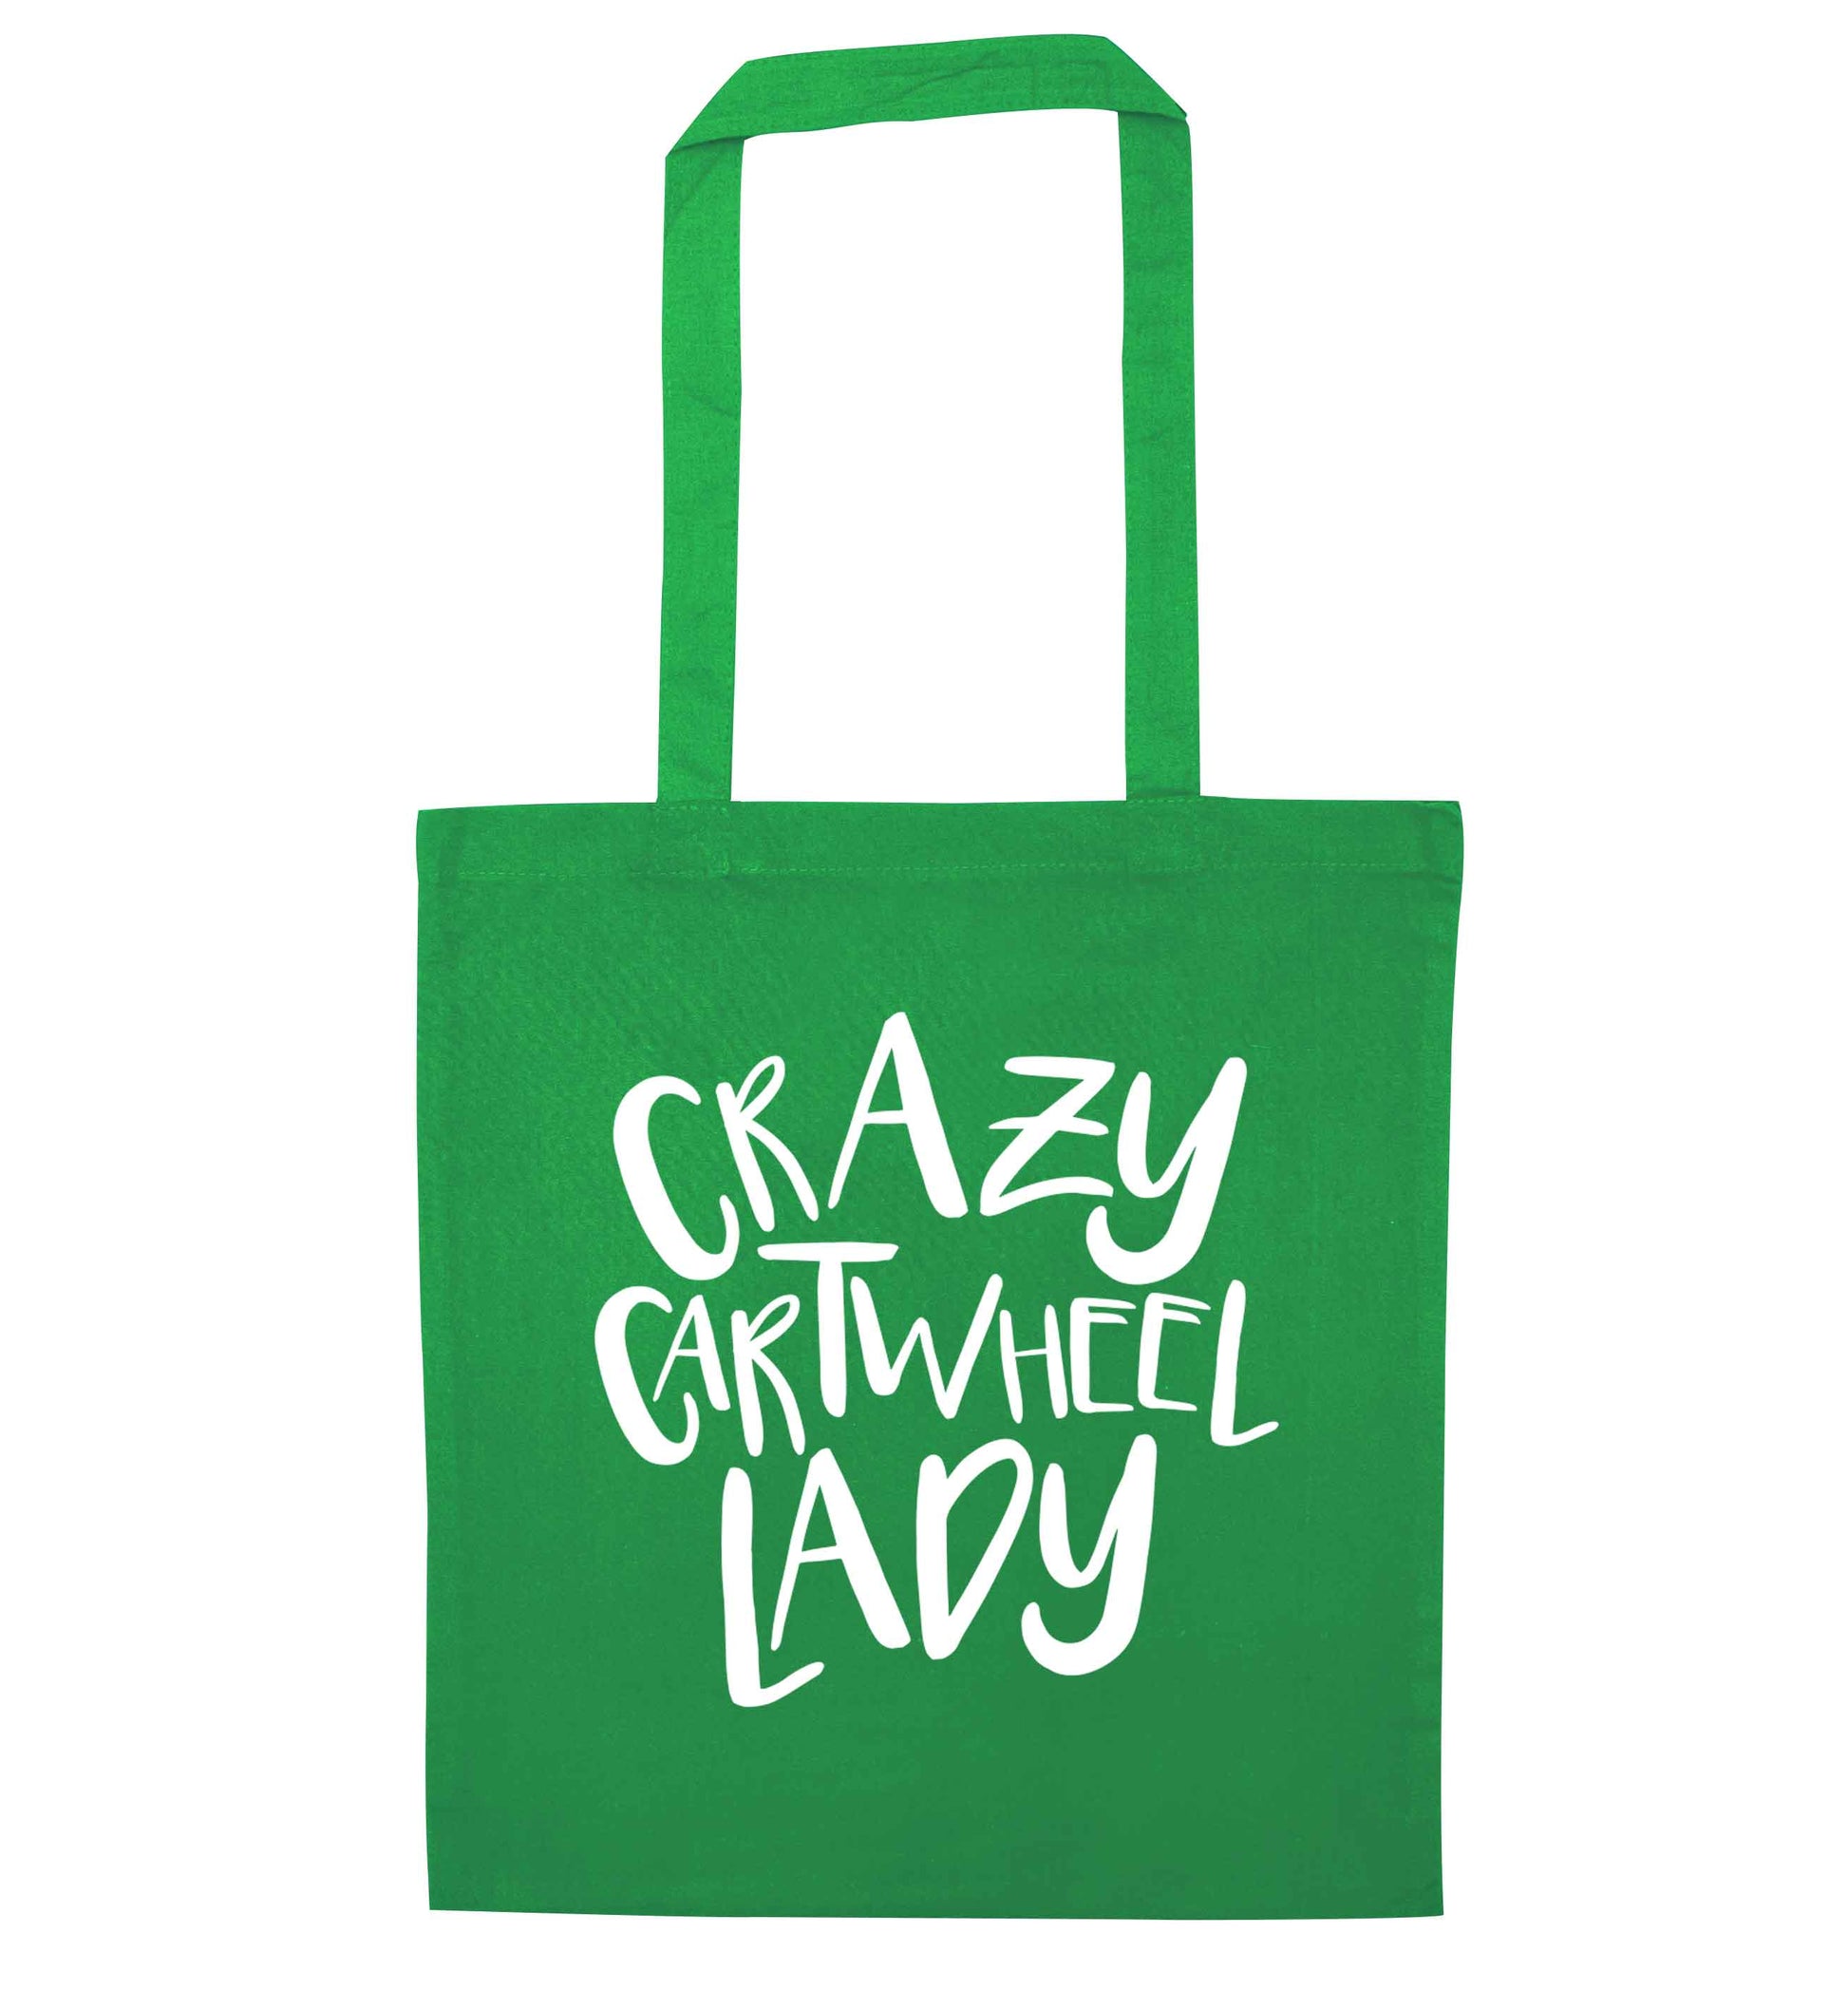 Crazy cartwheel lady green tote bag